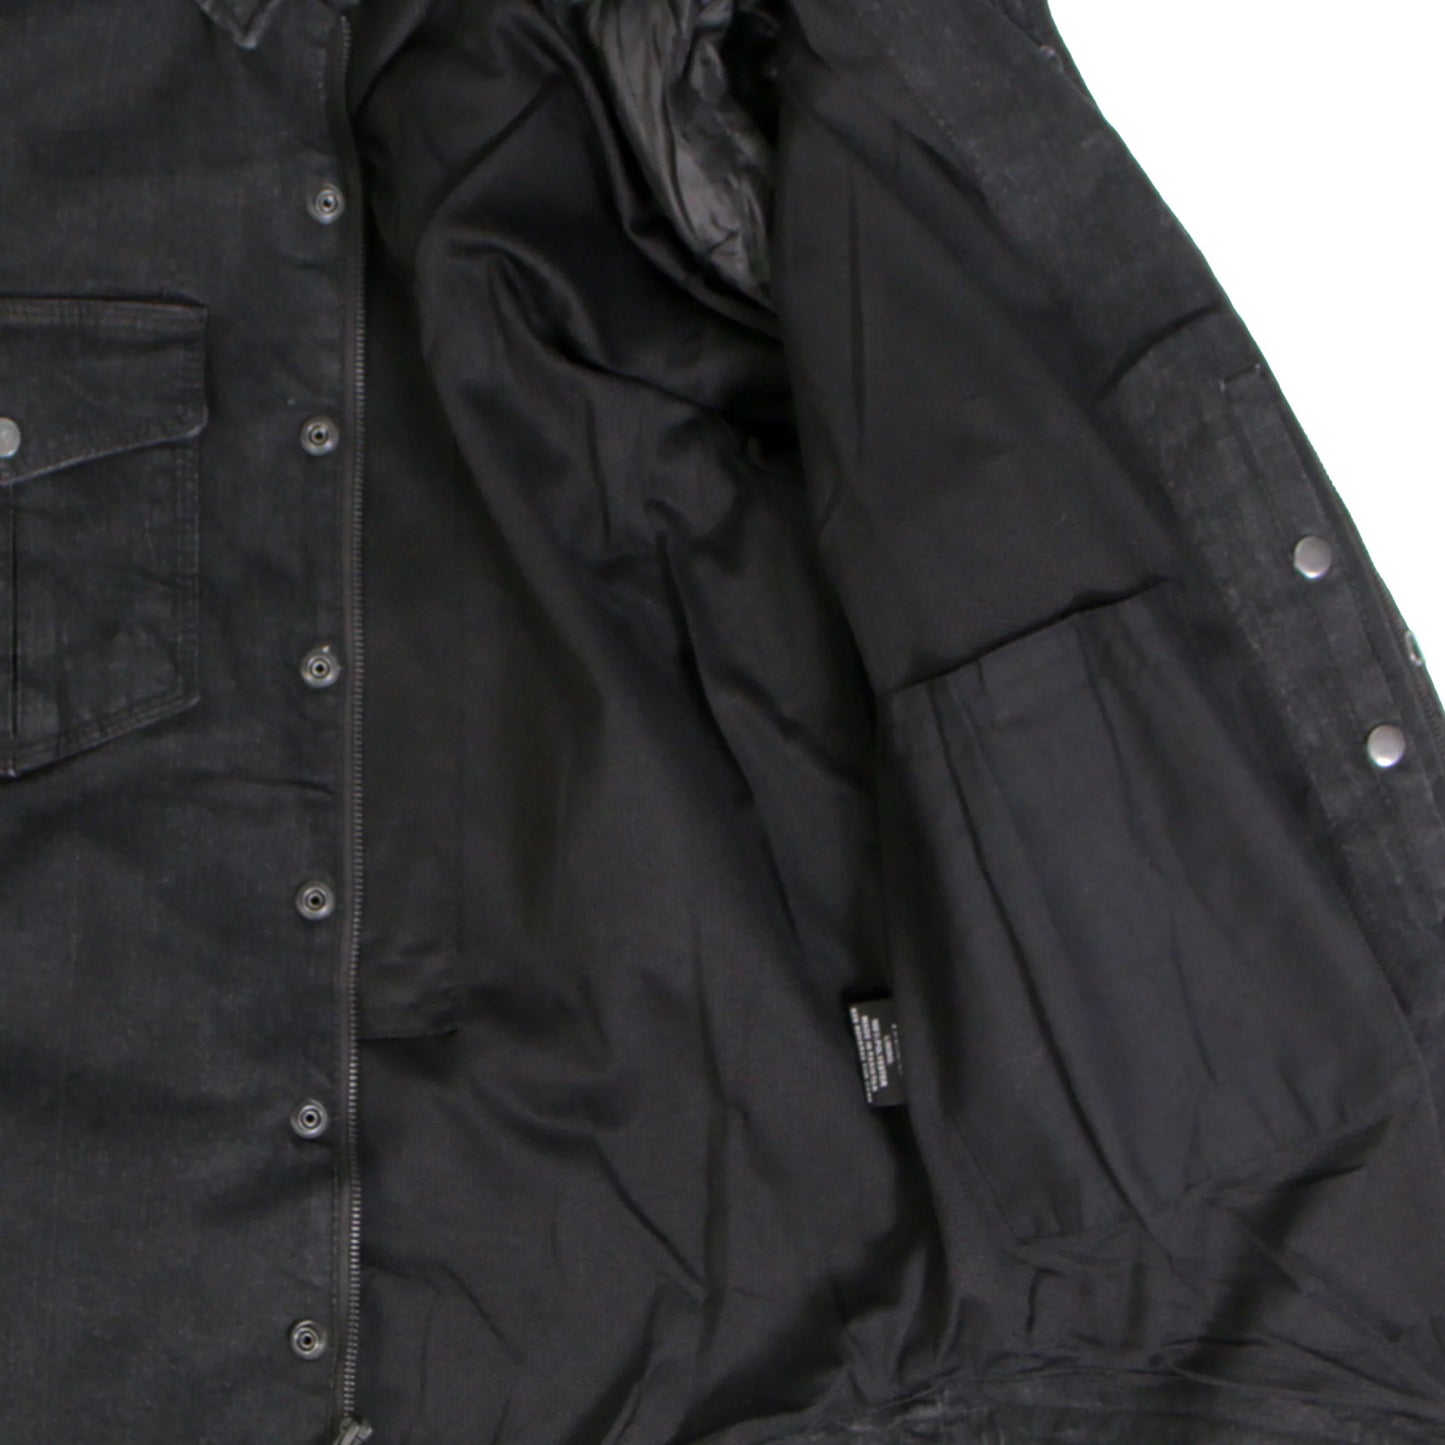 Hot Leathers Men's Classic Motorcycle Black Denim Long Sleeve Biker Shirt With Armor